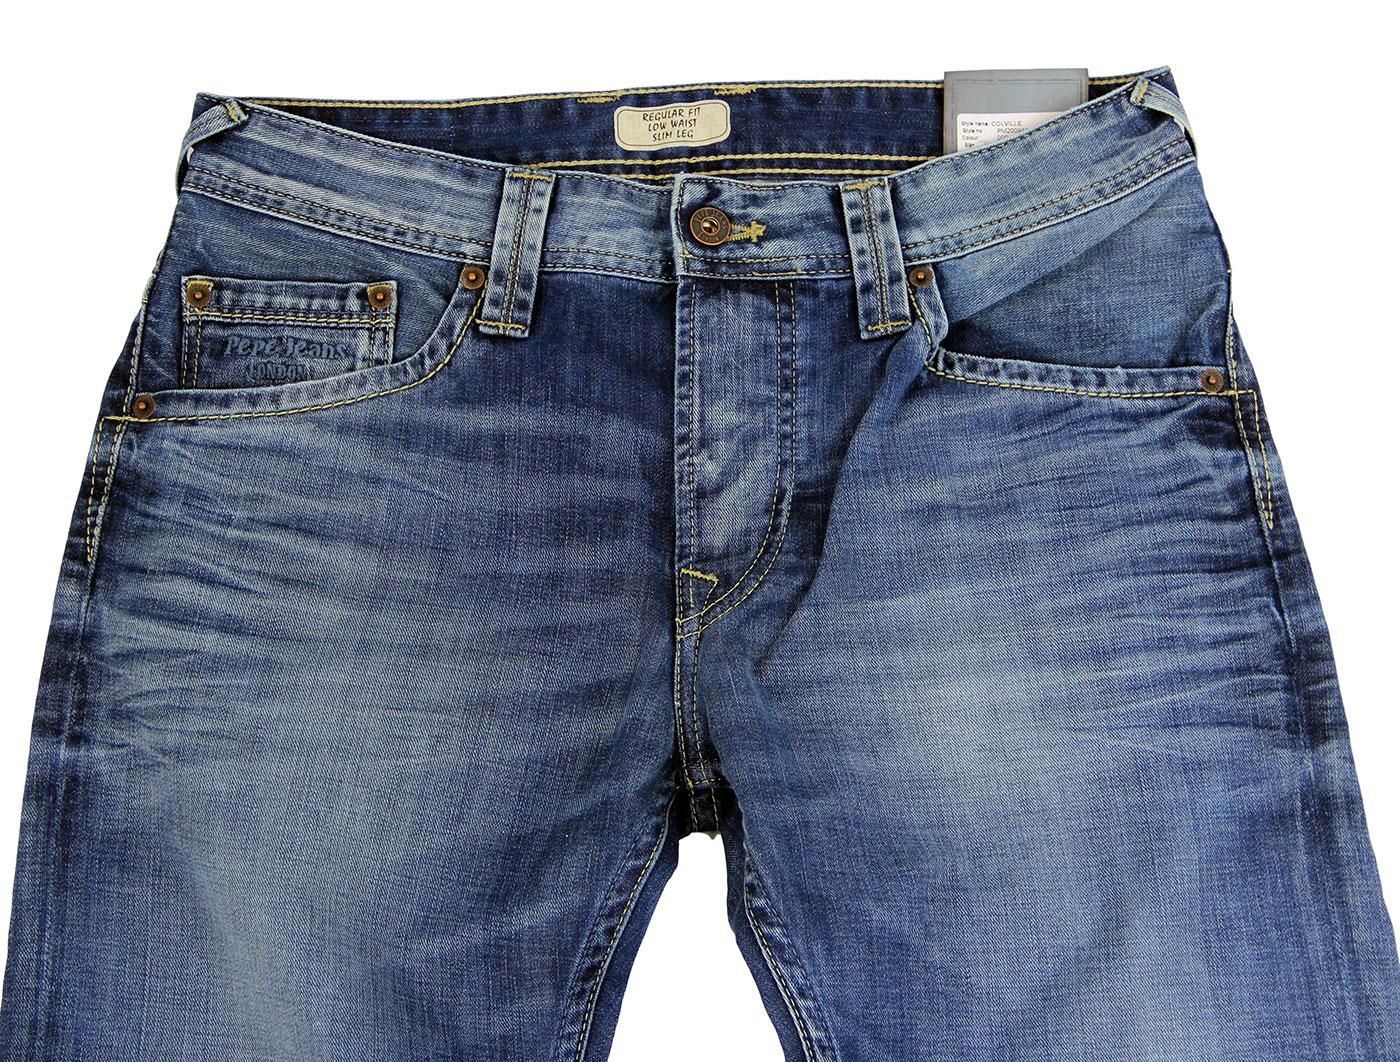 PEPE JEANS Colville Retro Indie Vintage Wash Slim Tapered Jeans